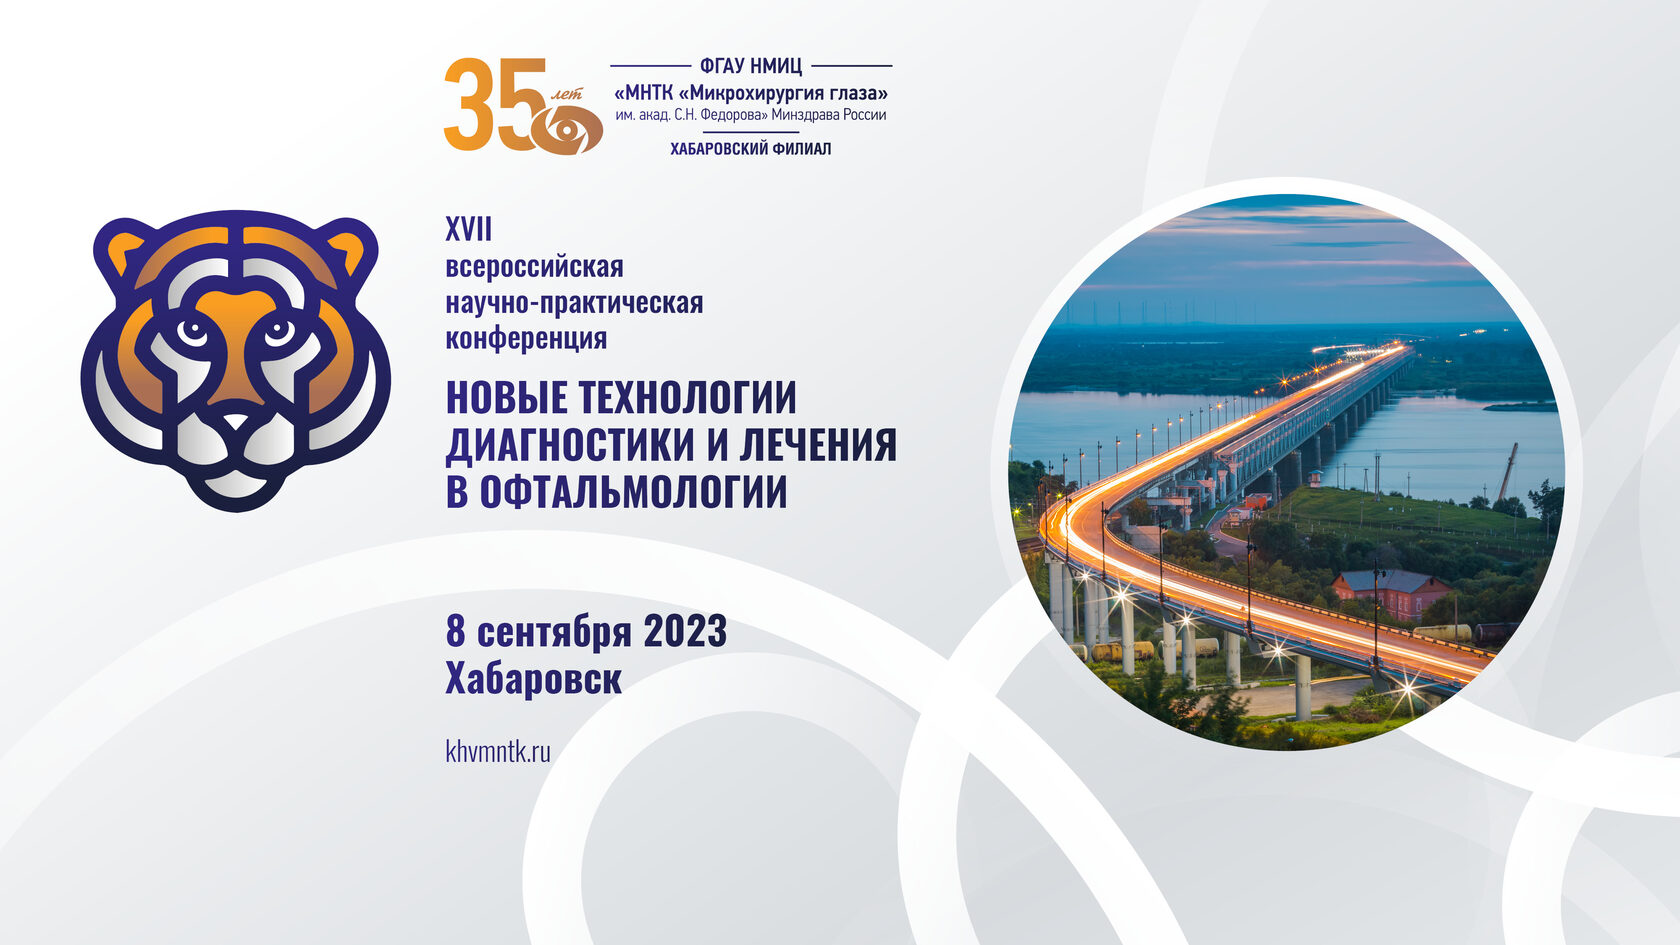 МНТК Нижний Новгород офтальмология конференция 2024. Смк 2023